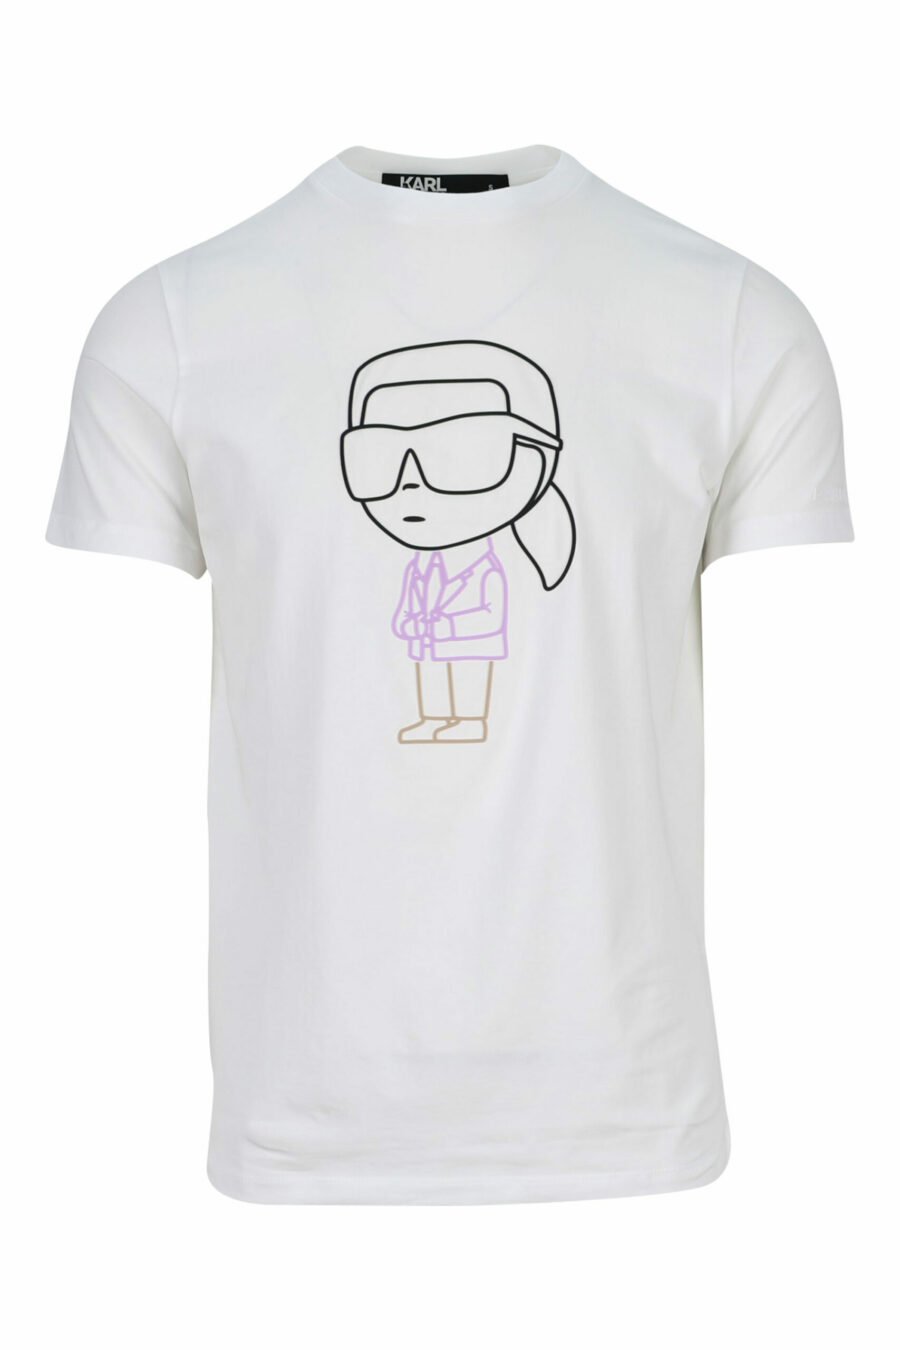 Camiseta blanca con maxilogo "karl silueta" multicolor - 4062226400701 1 scaled